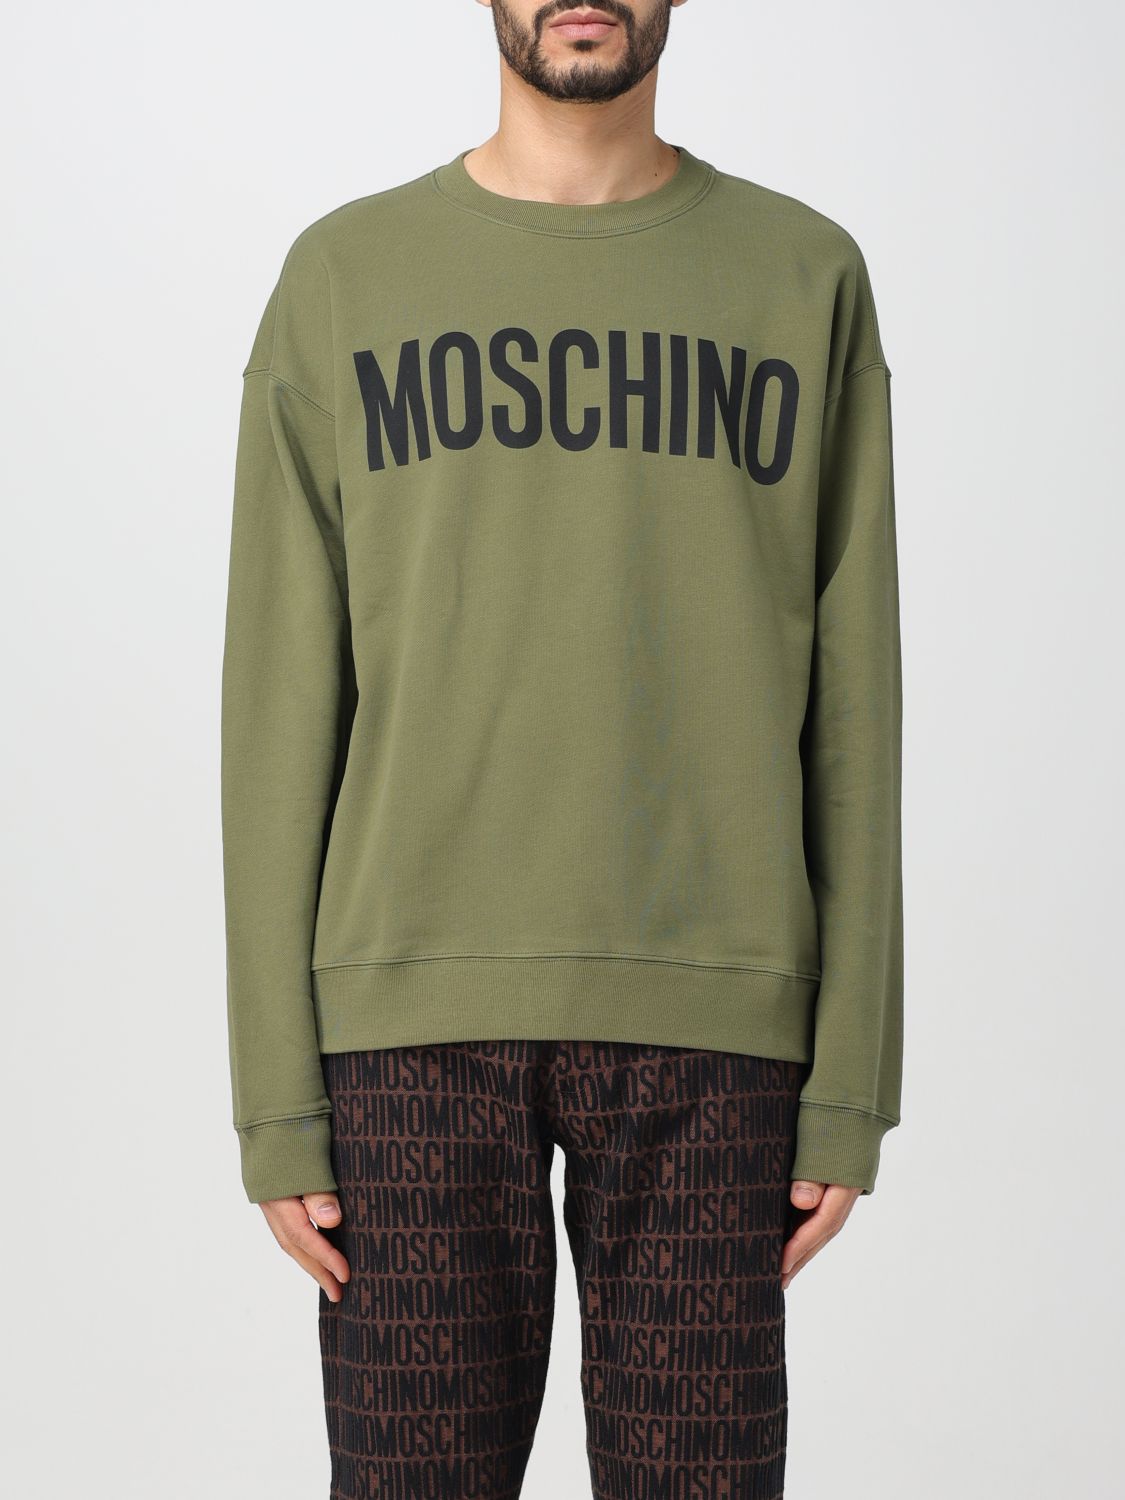 Moschino Couture Sweatshirt  Men Colour Military